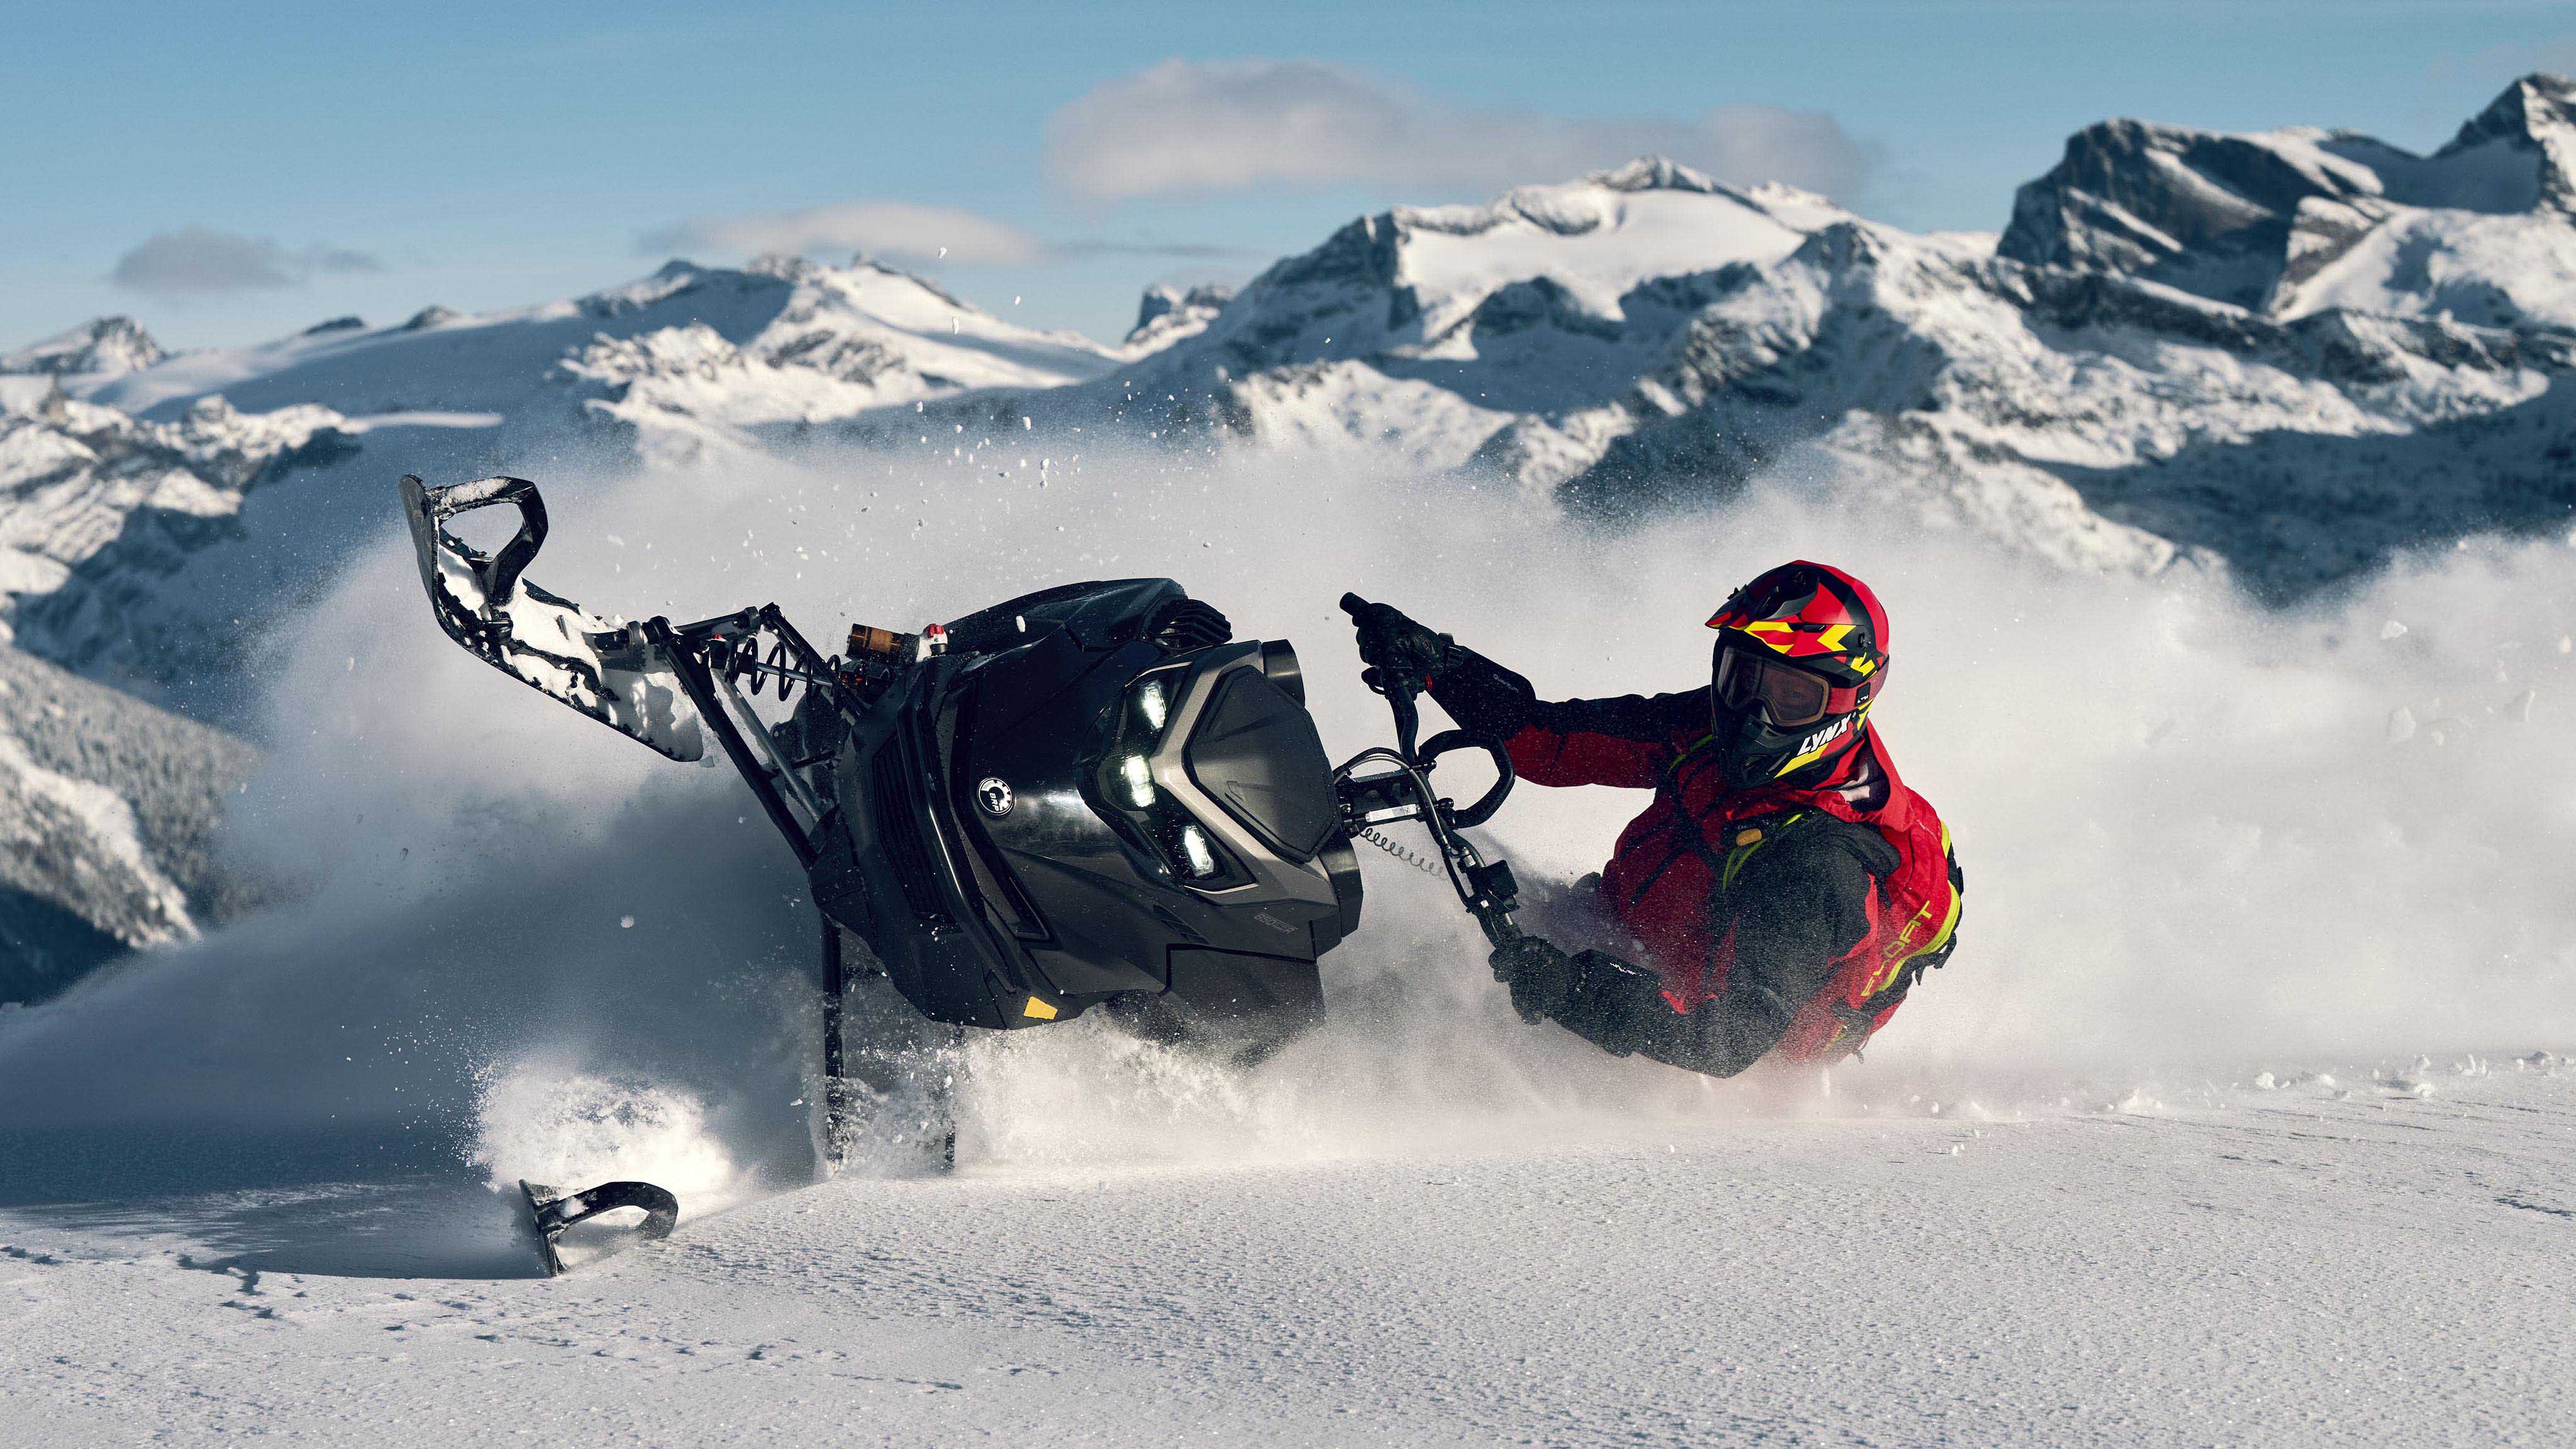 Lynx Shredder RE snowmobile making a tight turn in deep snow